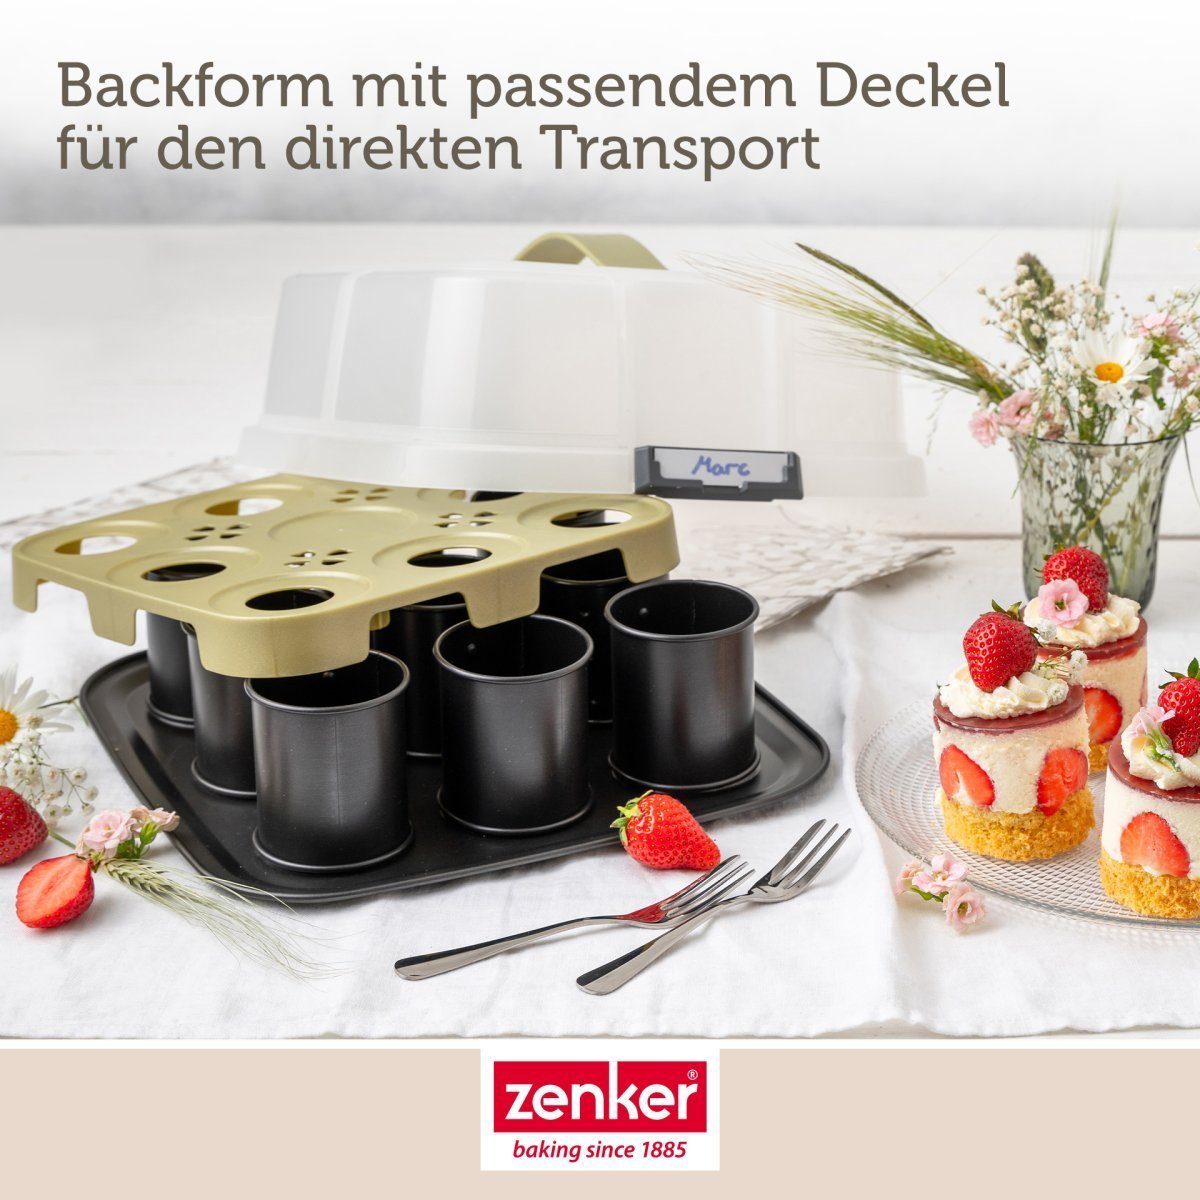 Zenker Backblech Bake, Click & Go